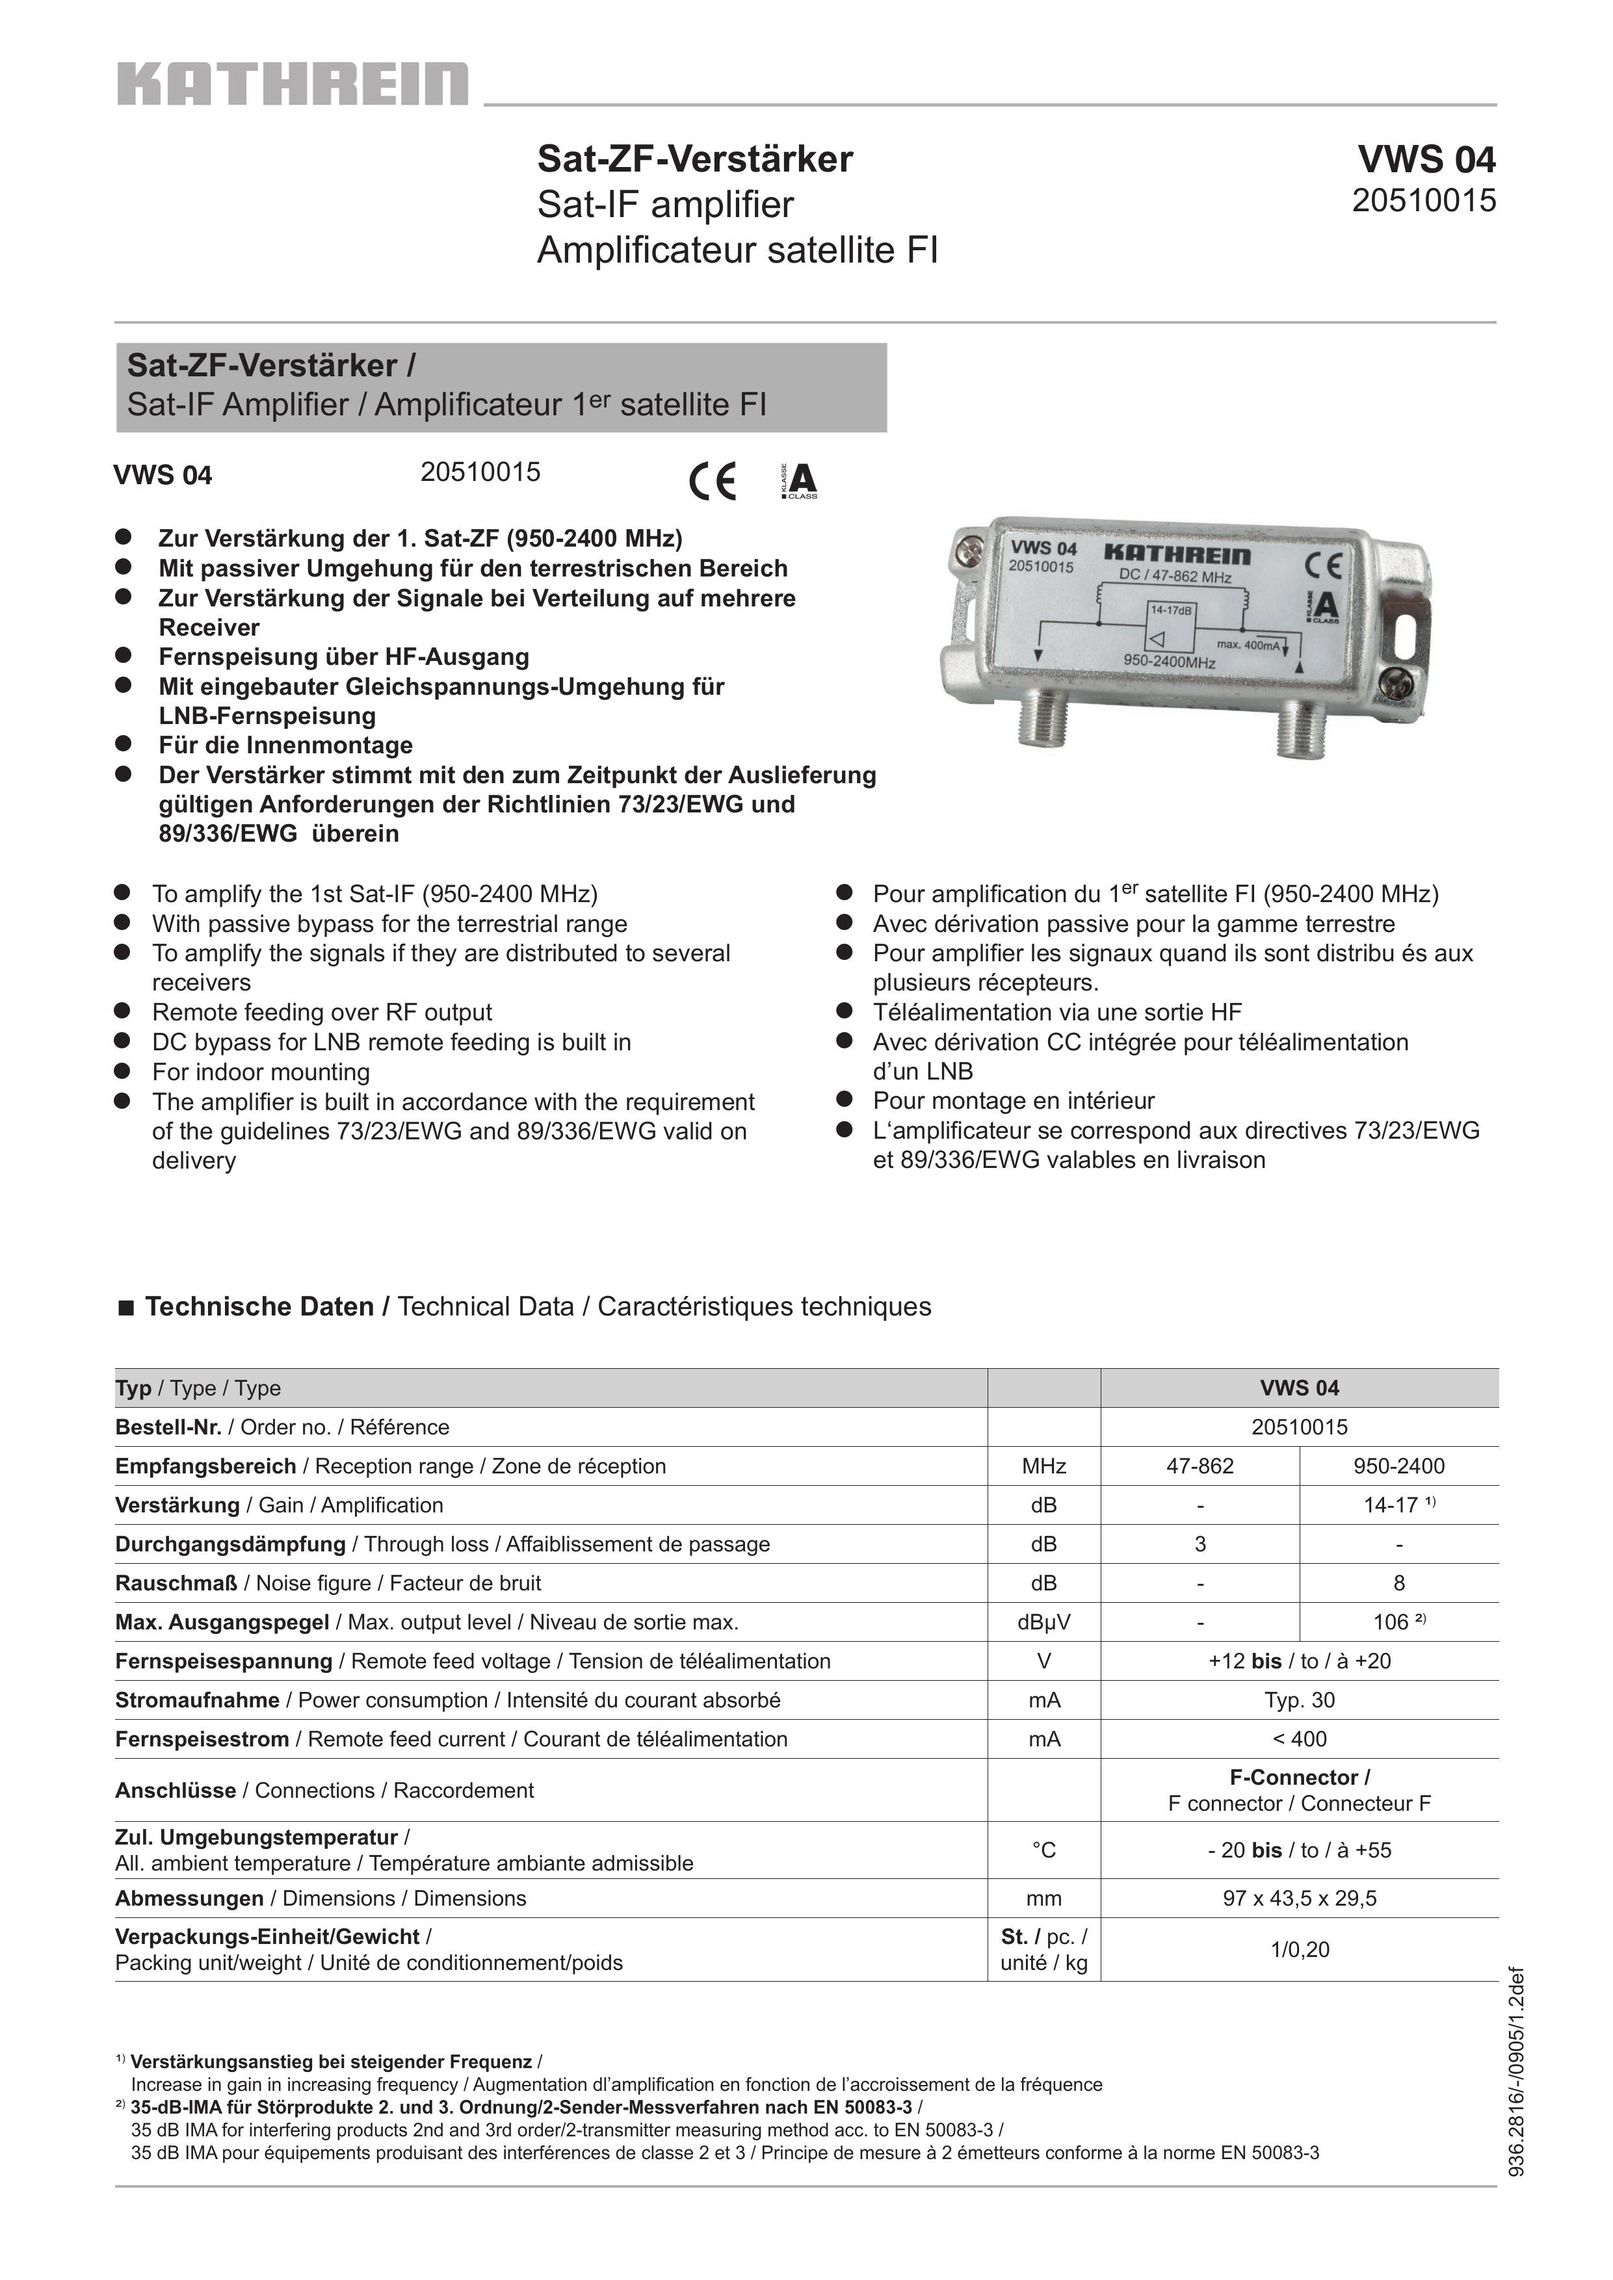 Kathrein VWS 04 Stereo Amplifier User Manual